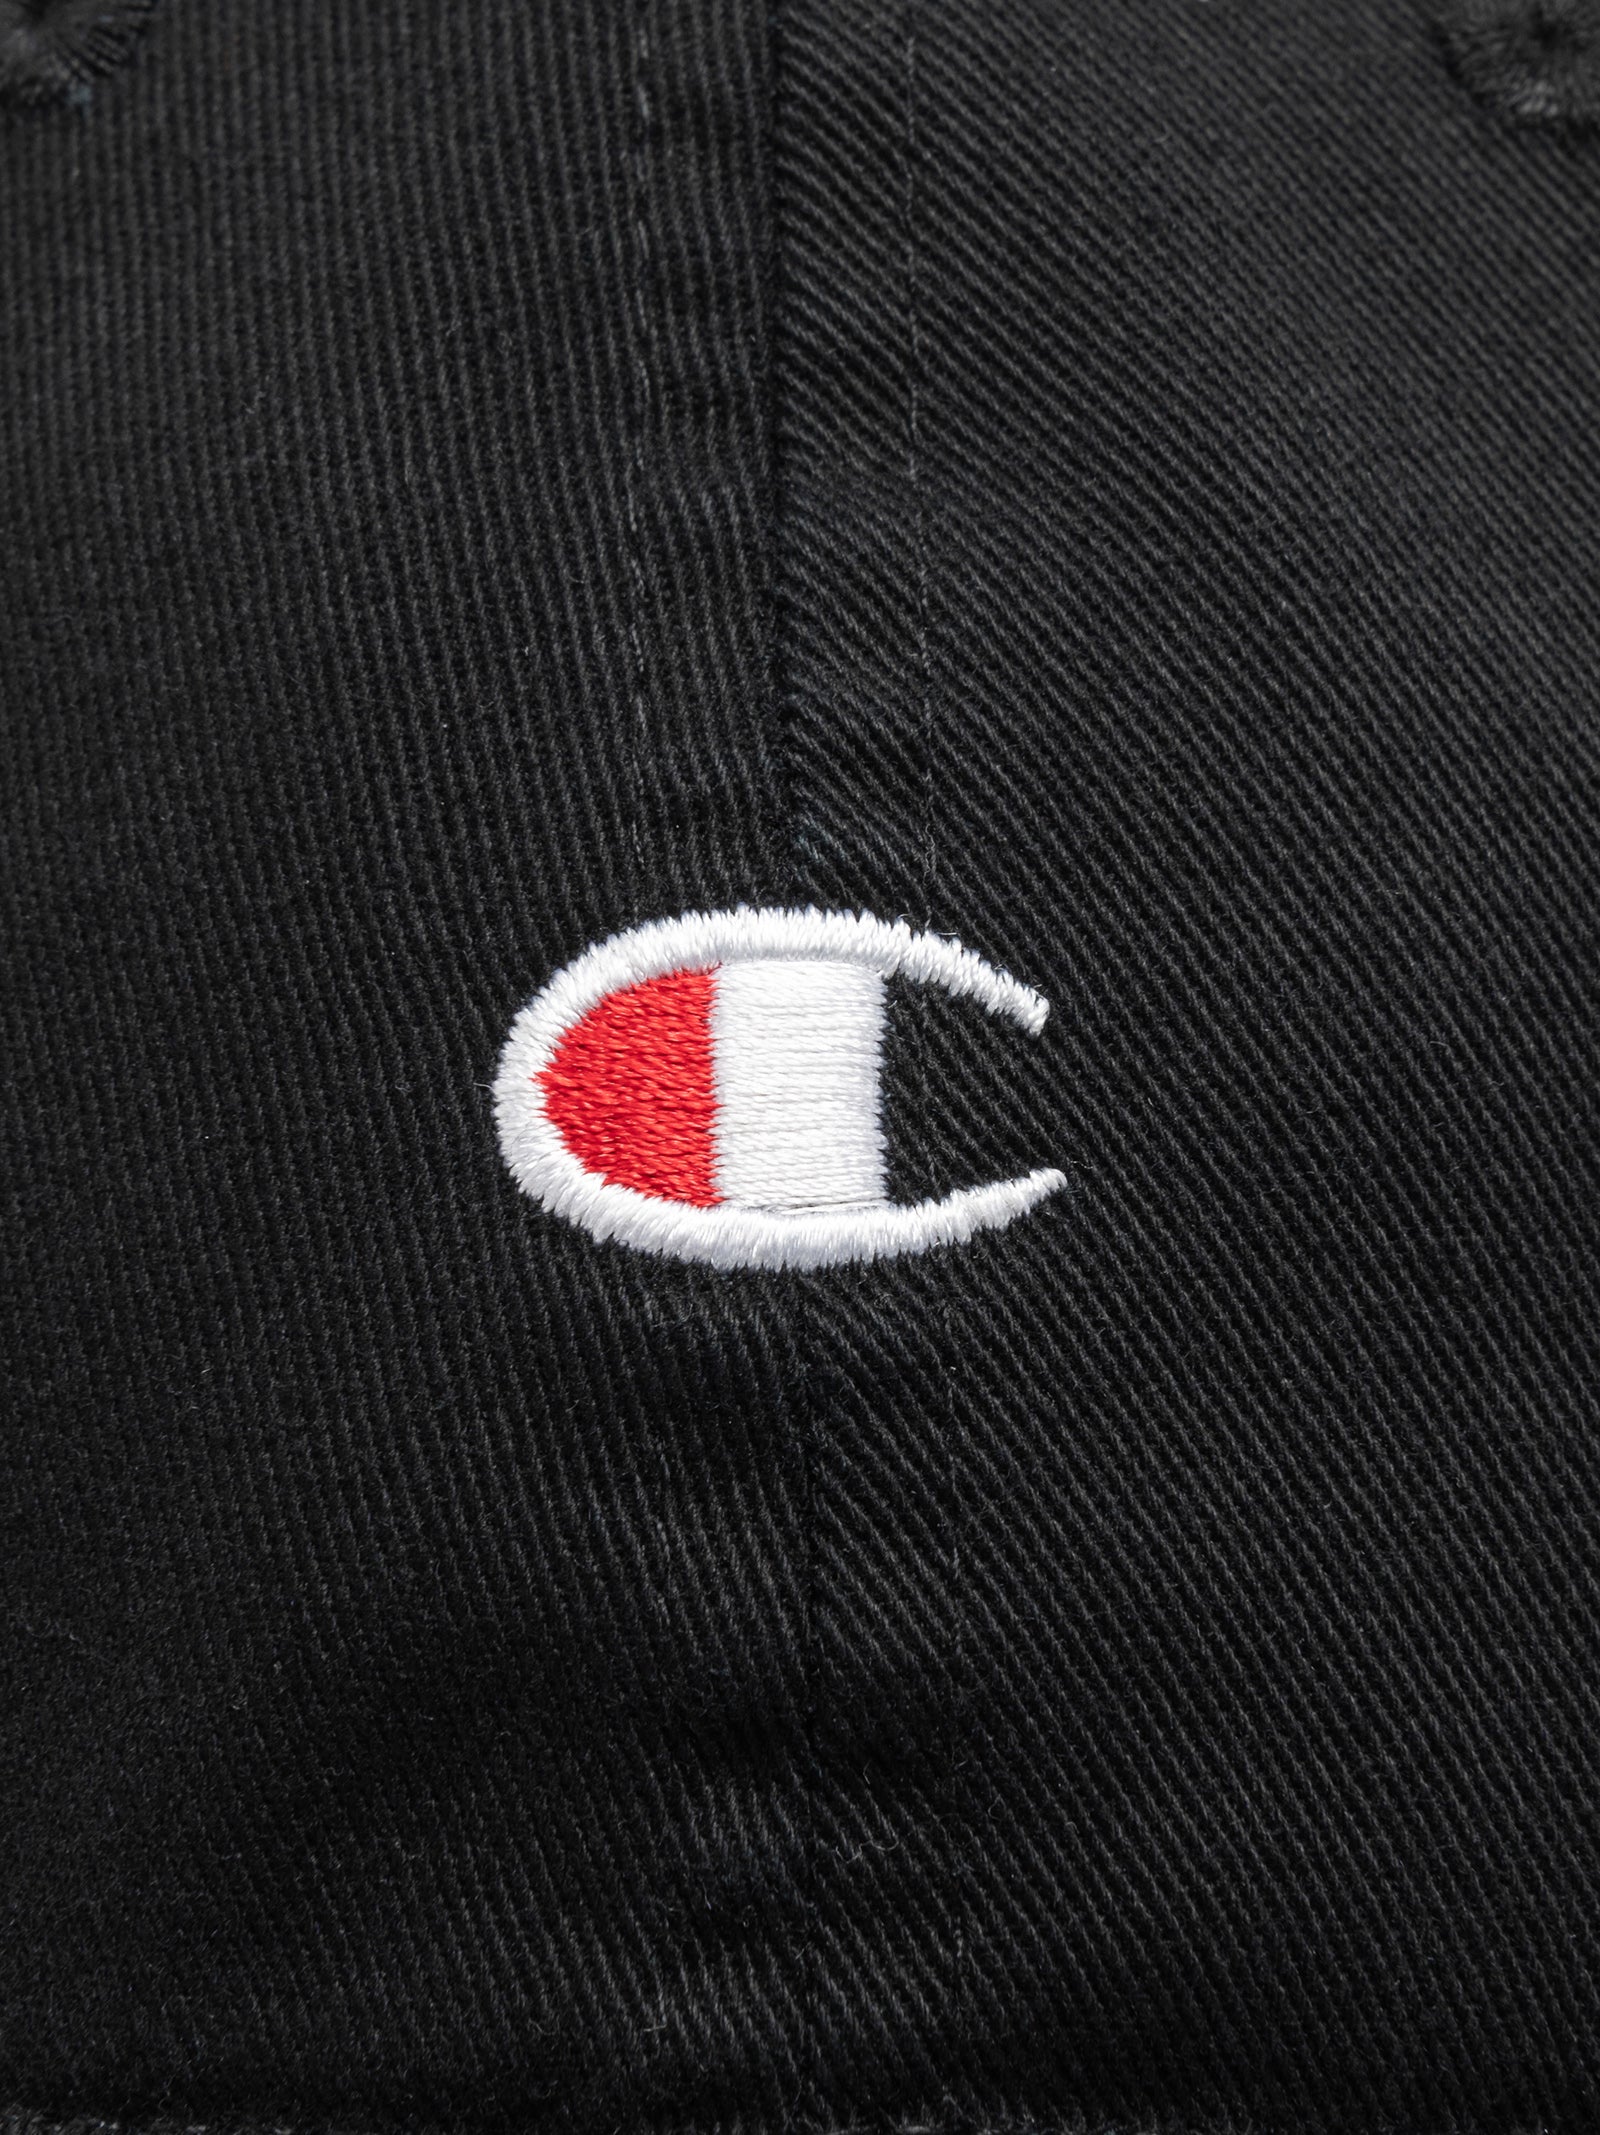 Japan Cap in Black